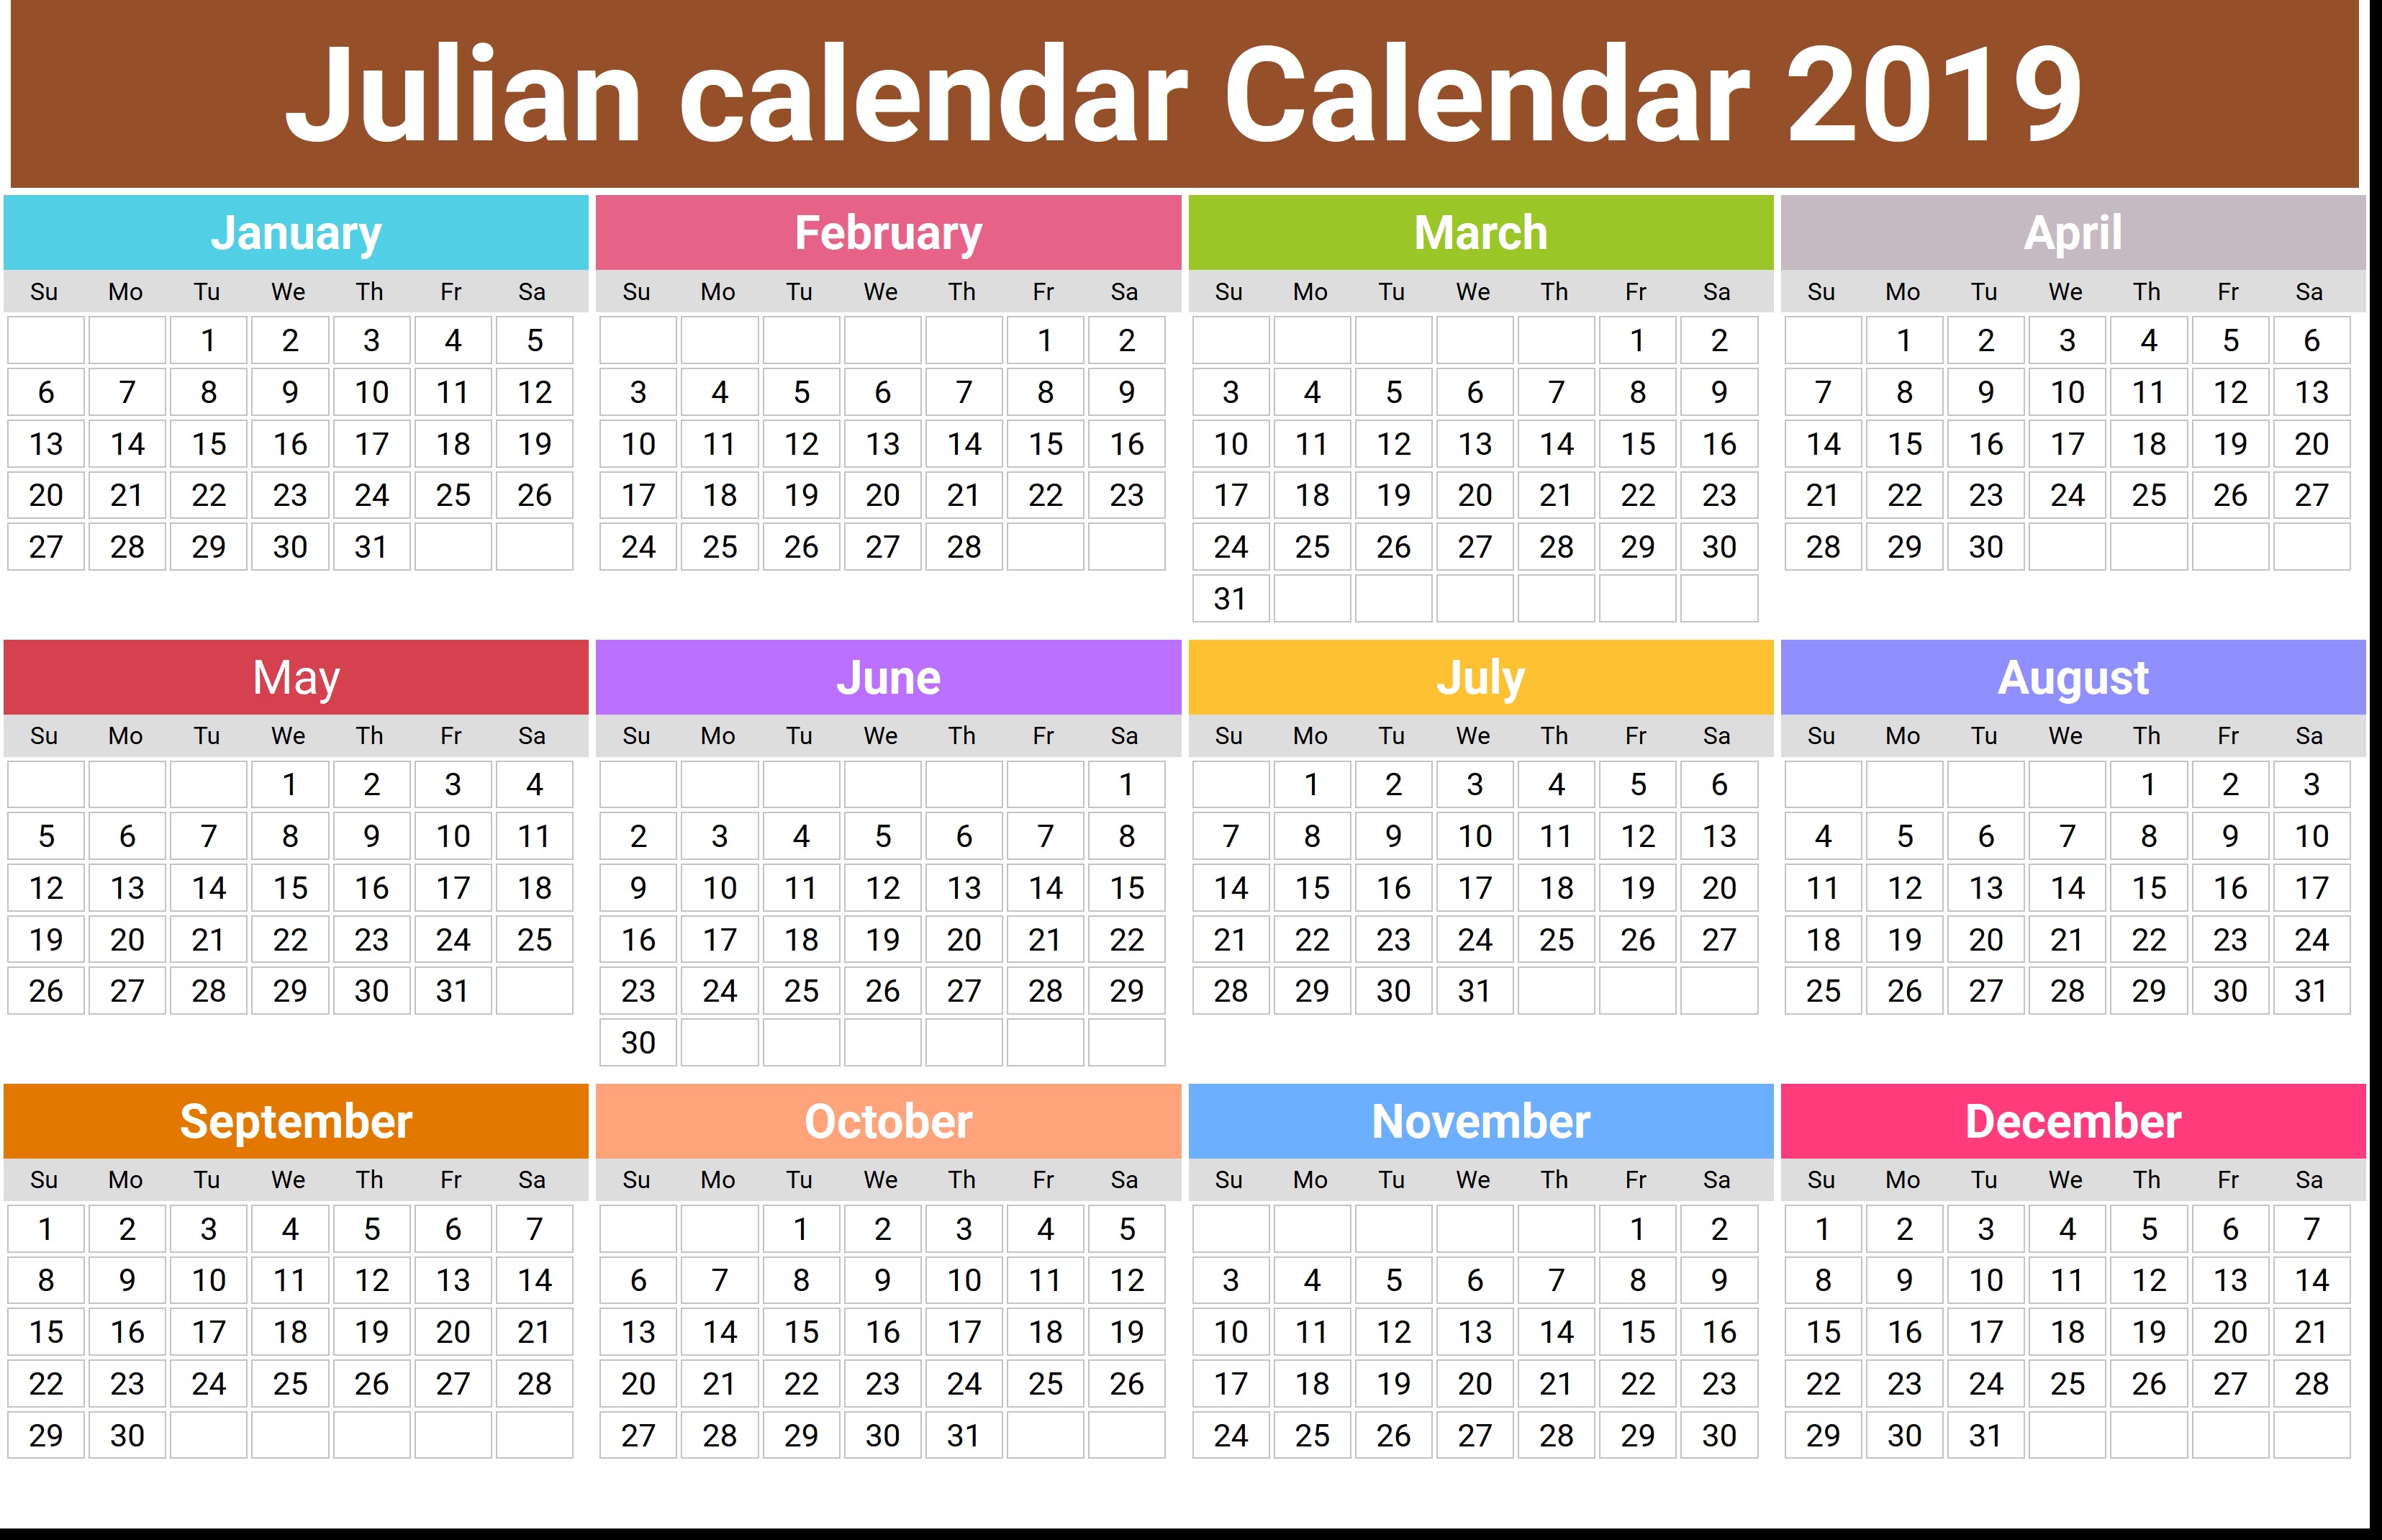 annual julian calendar calendar 2019